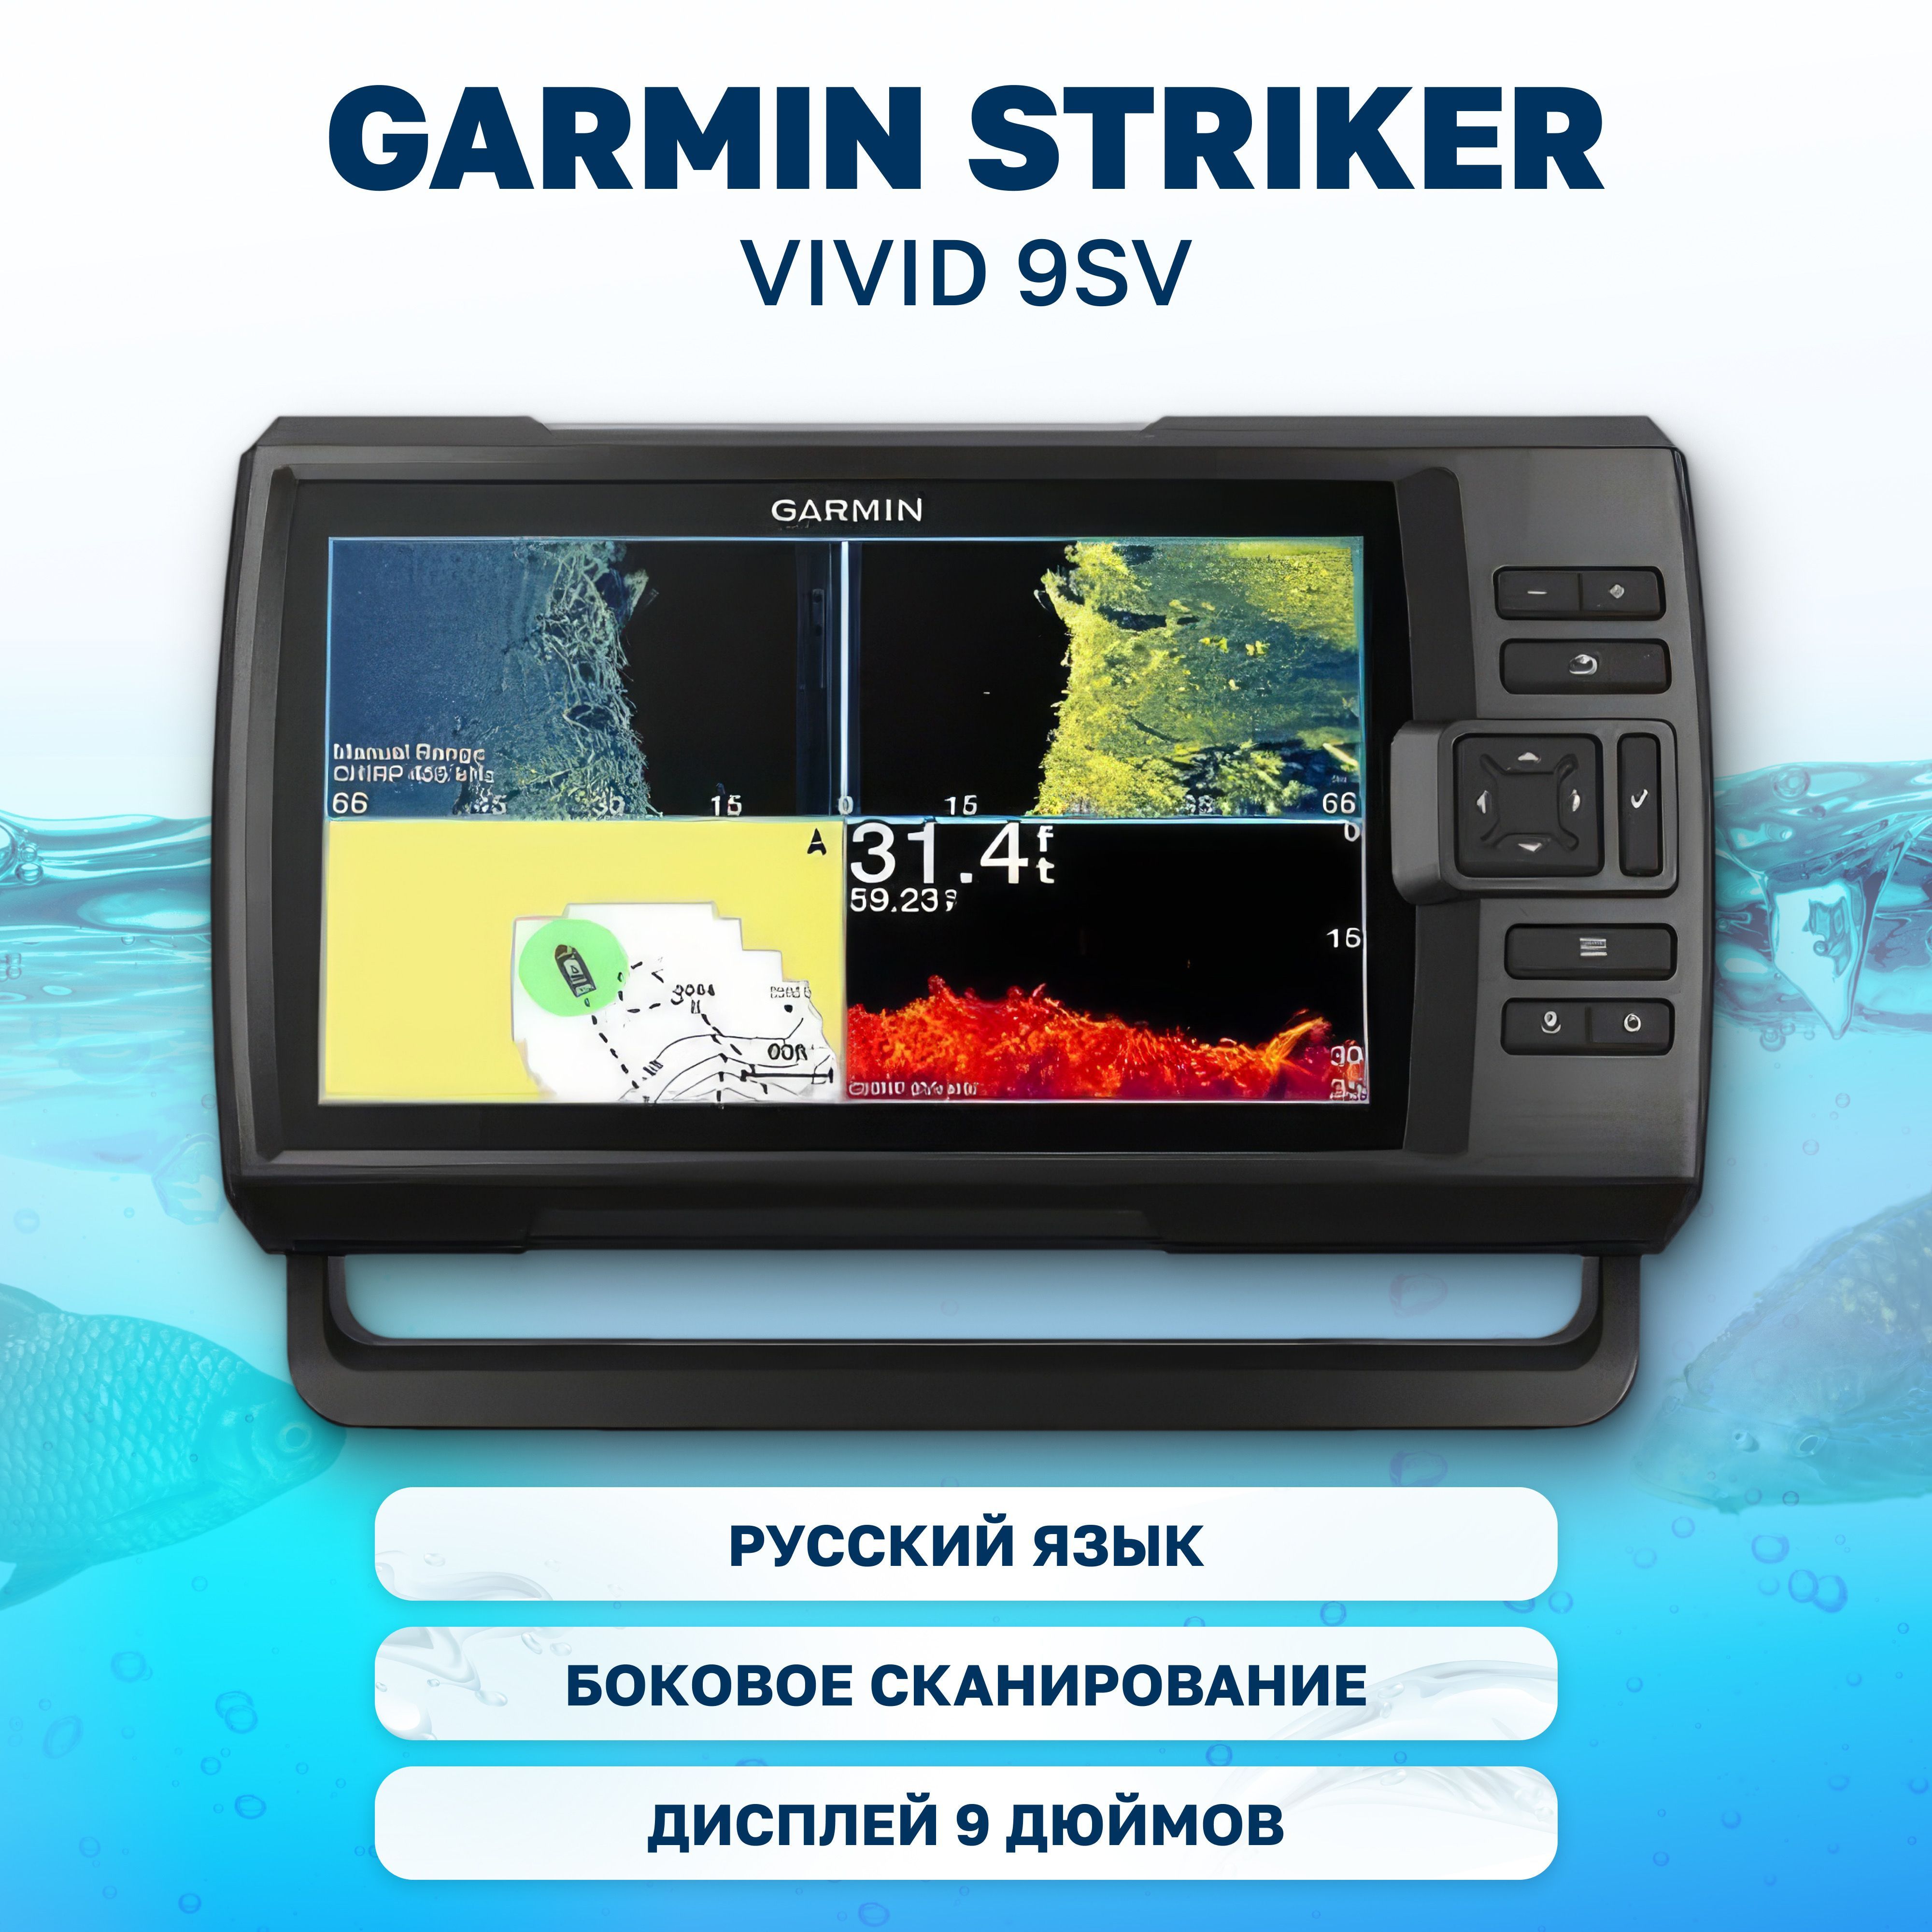 Gt52hw-TM. Чехол для Garmin Striker vivid 9sv. Garmin Striker vivid 9sv +52 датчик цена. Garmin Striker vivid 7sv с датчиком gt52hw-TM цены. Страйкер вивид 9